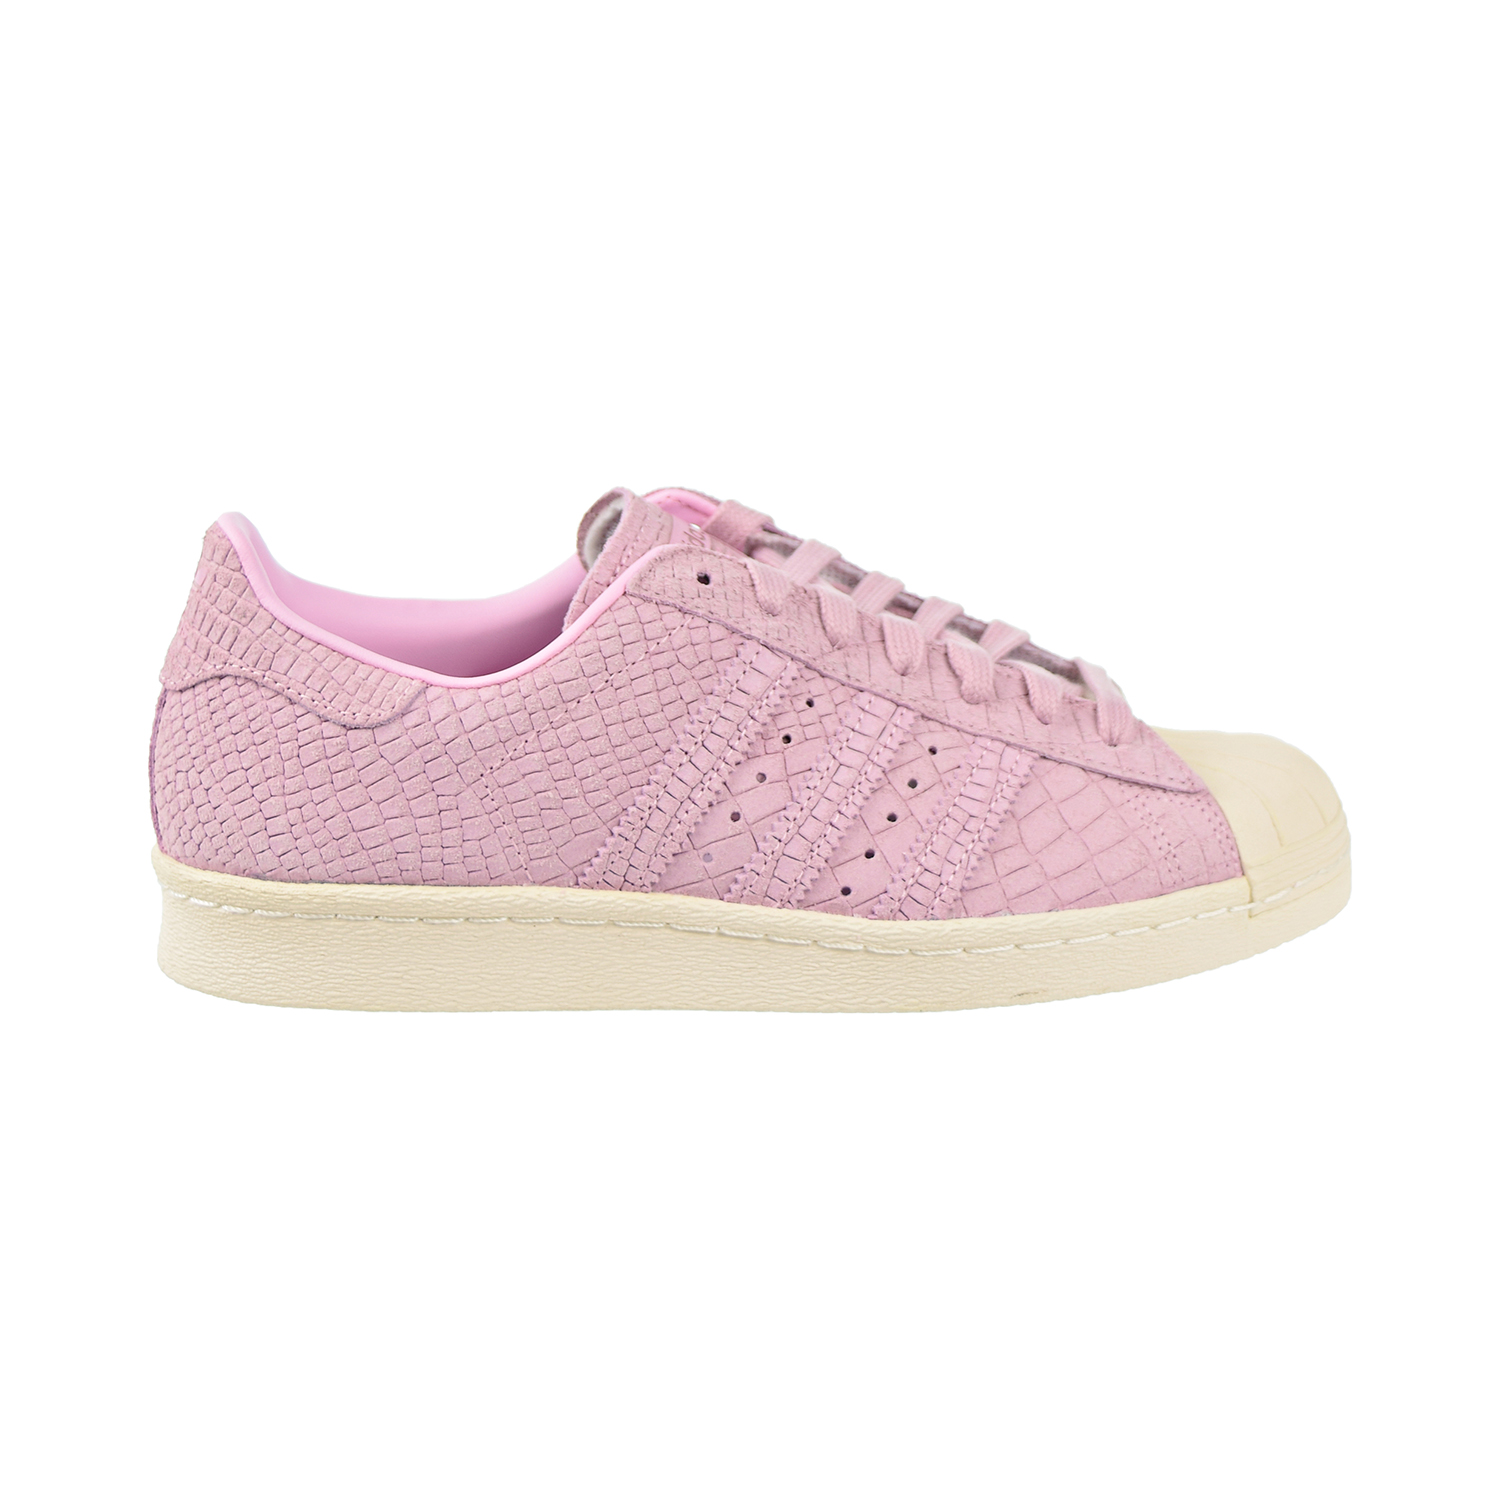 Adidas Superstar 80s Womens Shoes Wonder Pink-Off White CQ2516 | eBay